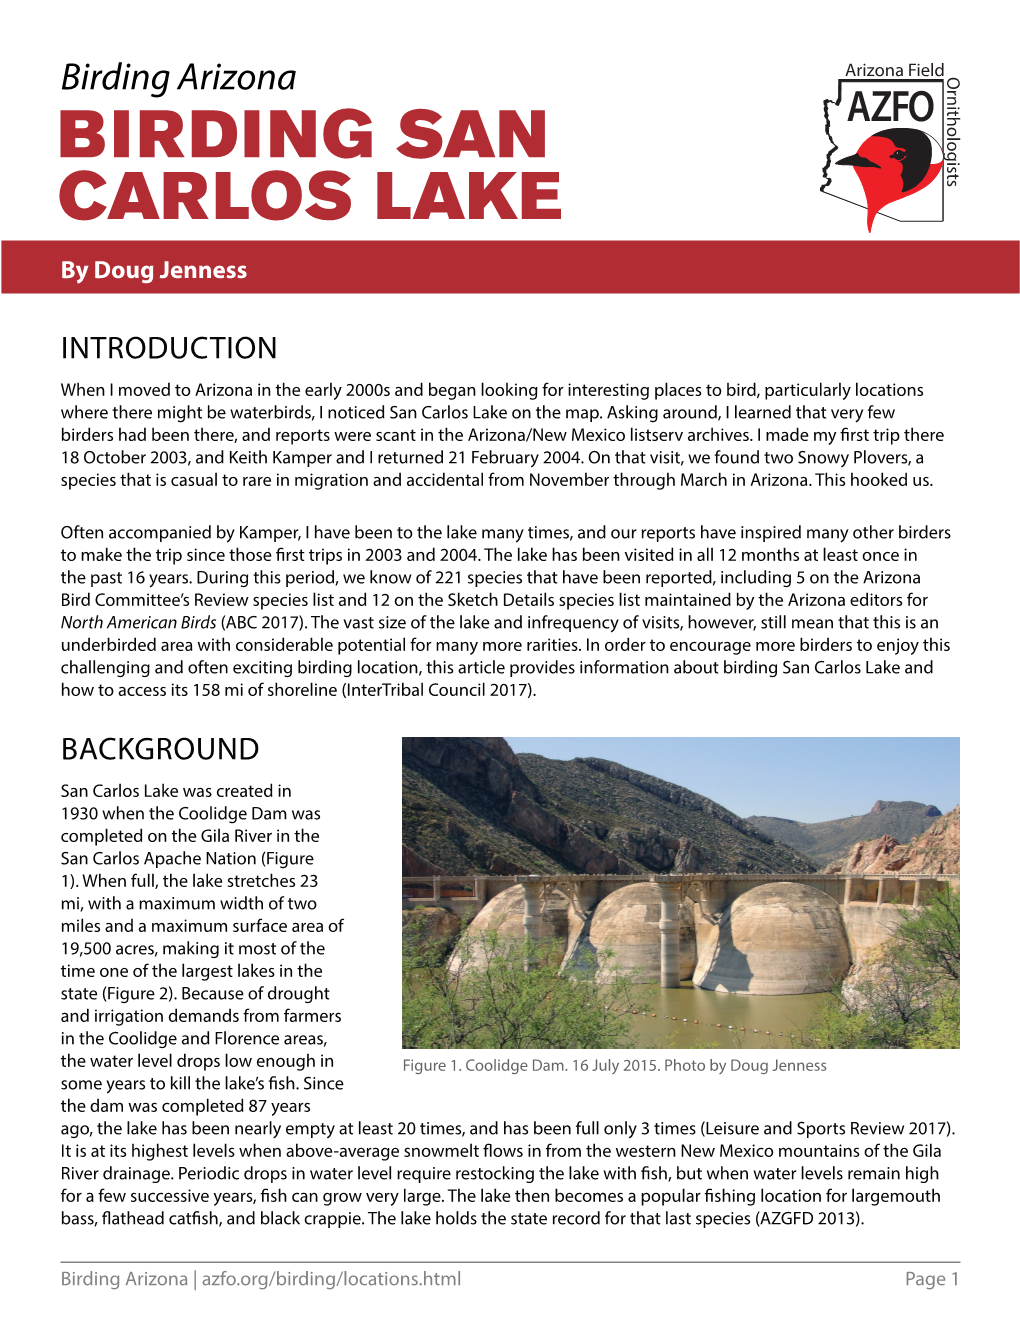 Briding San Carlos Lake